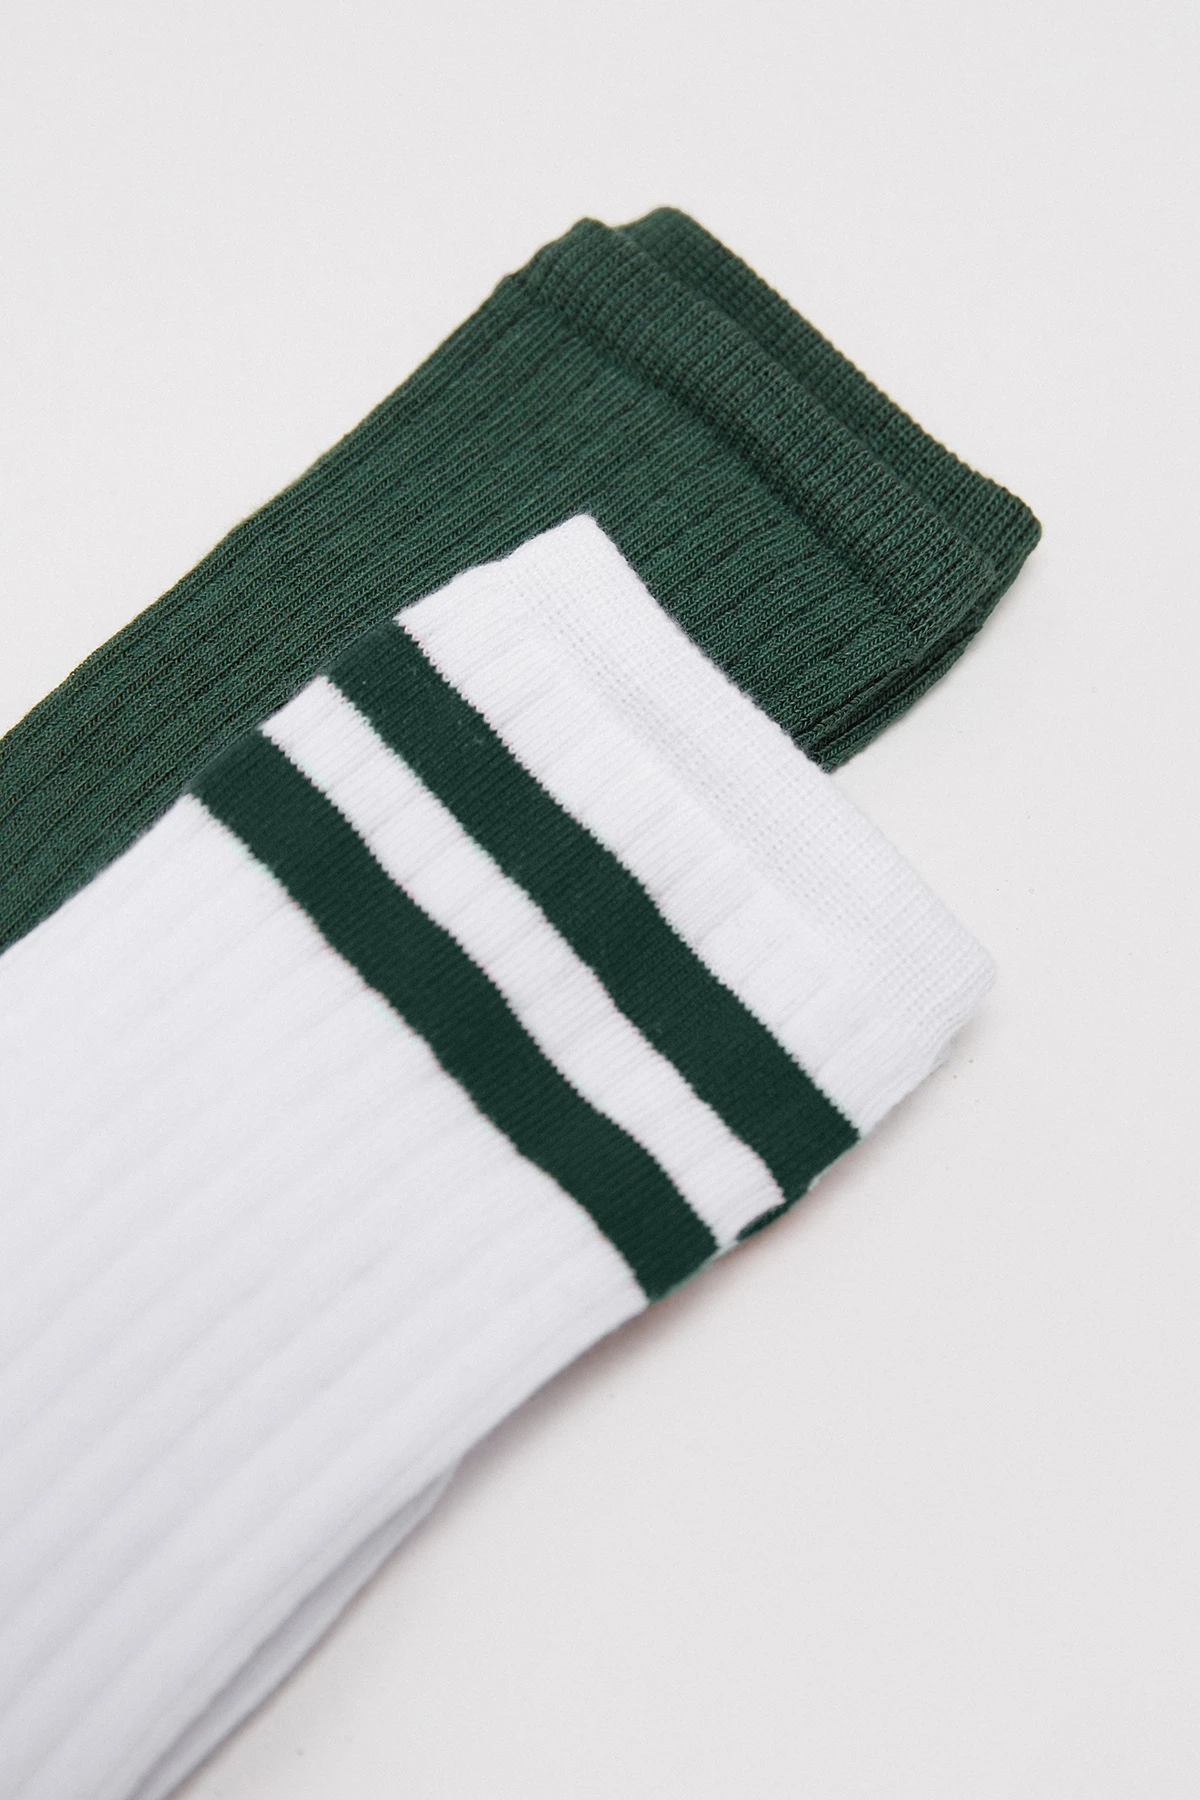 Set of high socks "Green" (2 pairs), photo 1